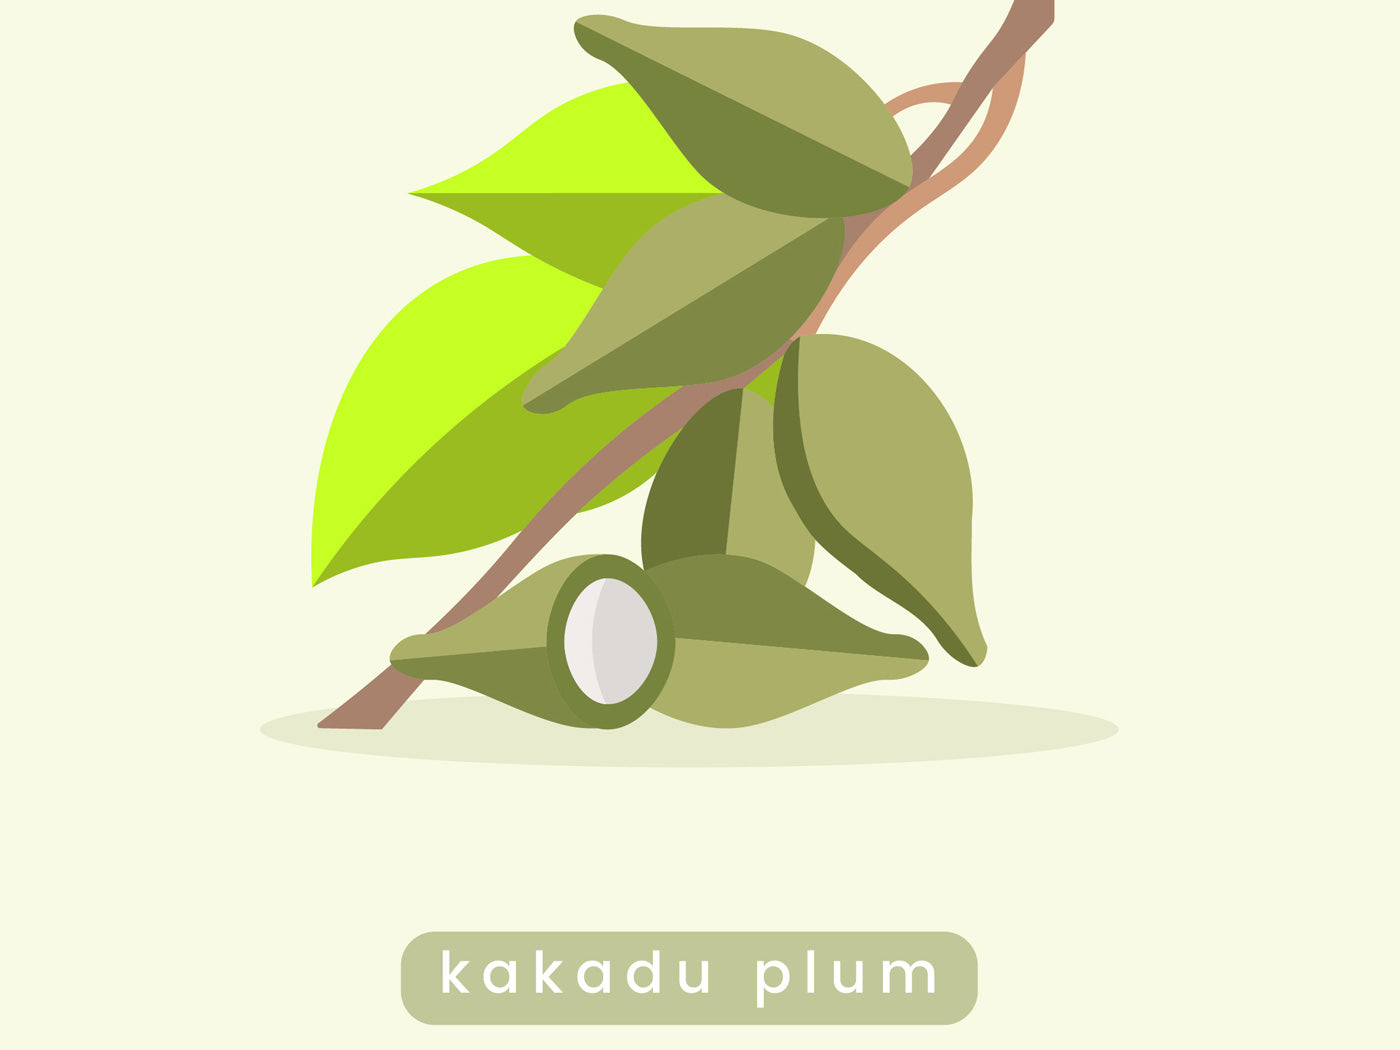 What is Kakadu Plum